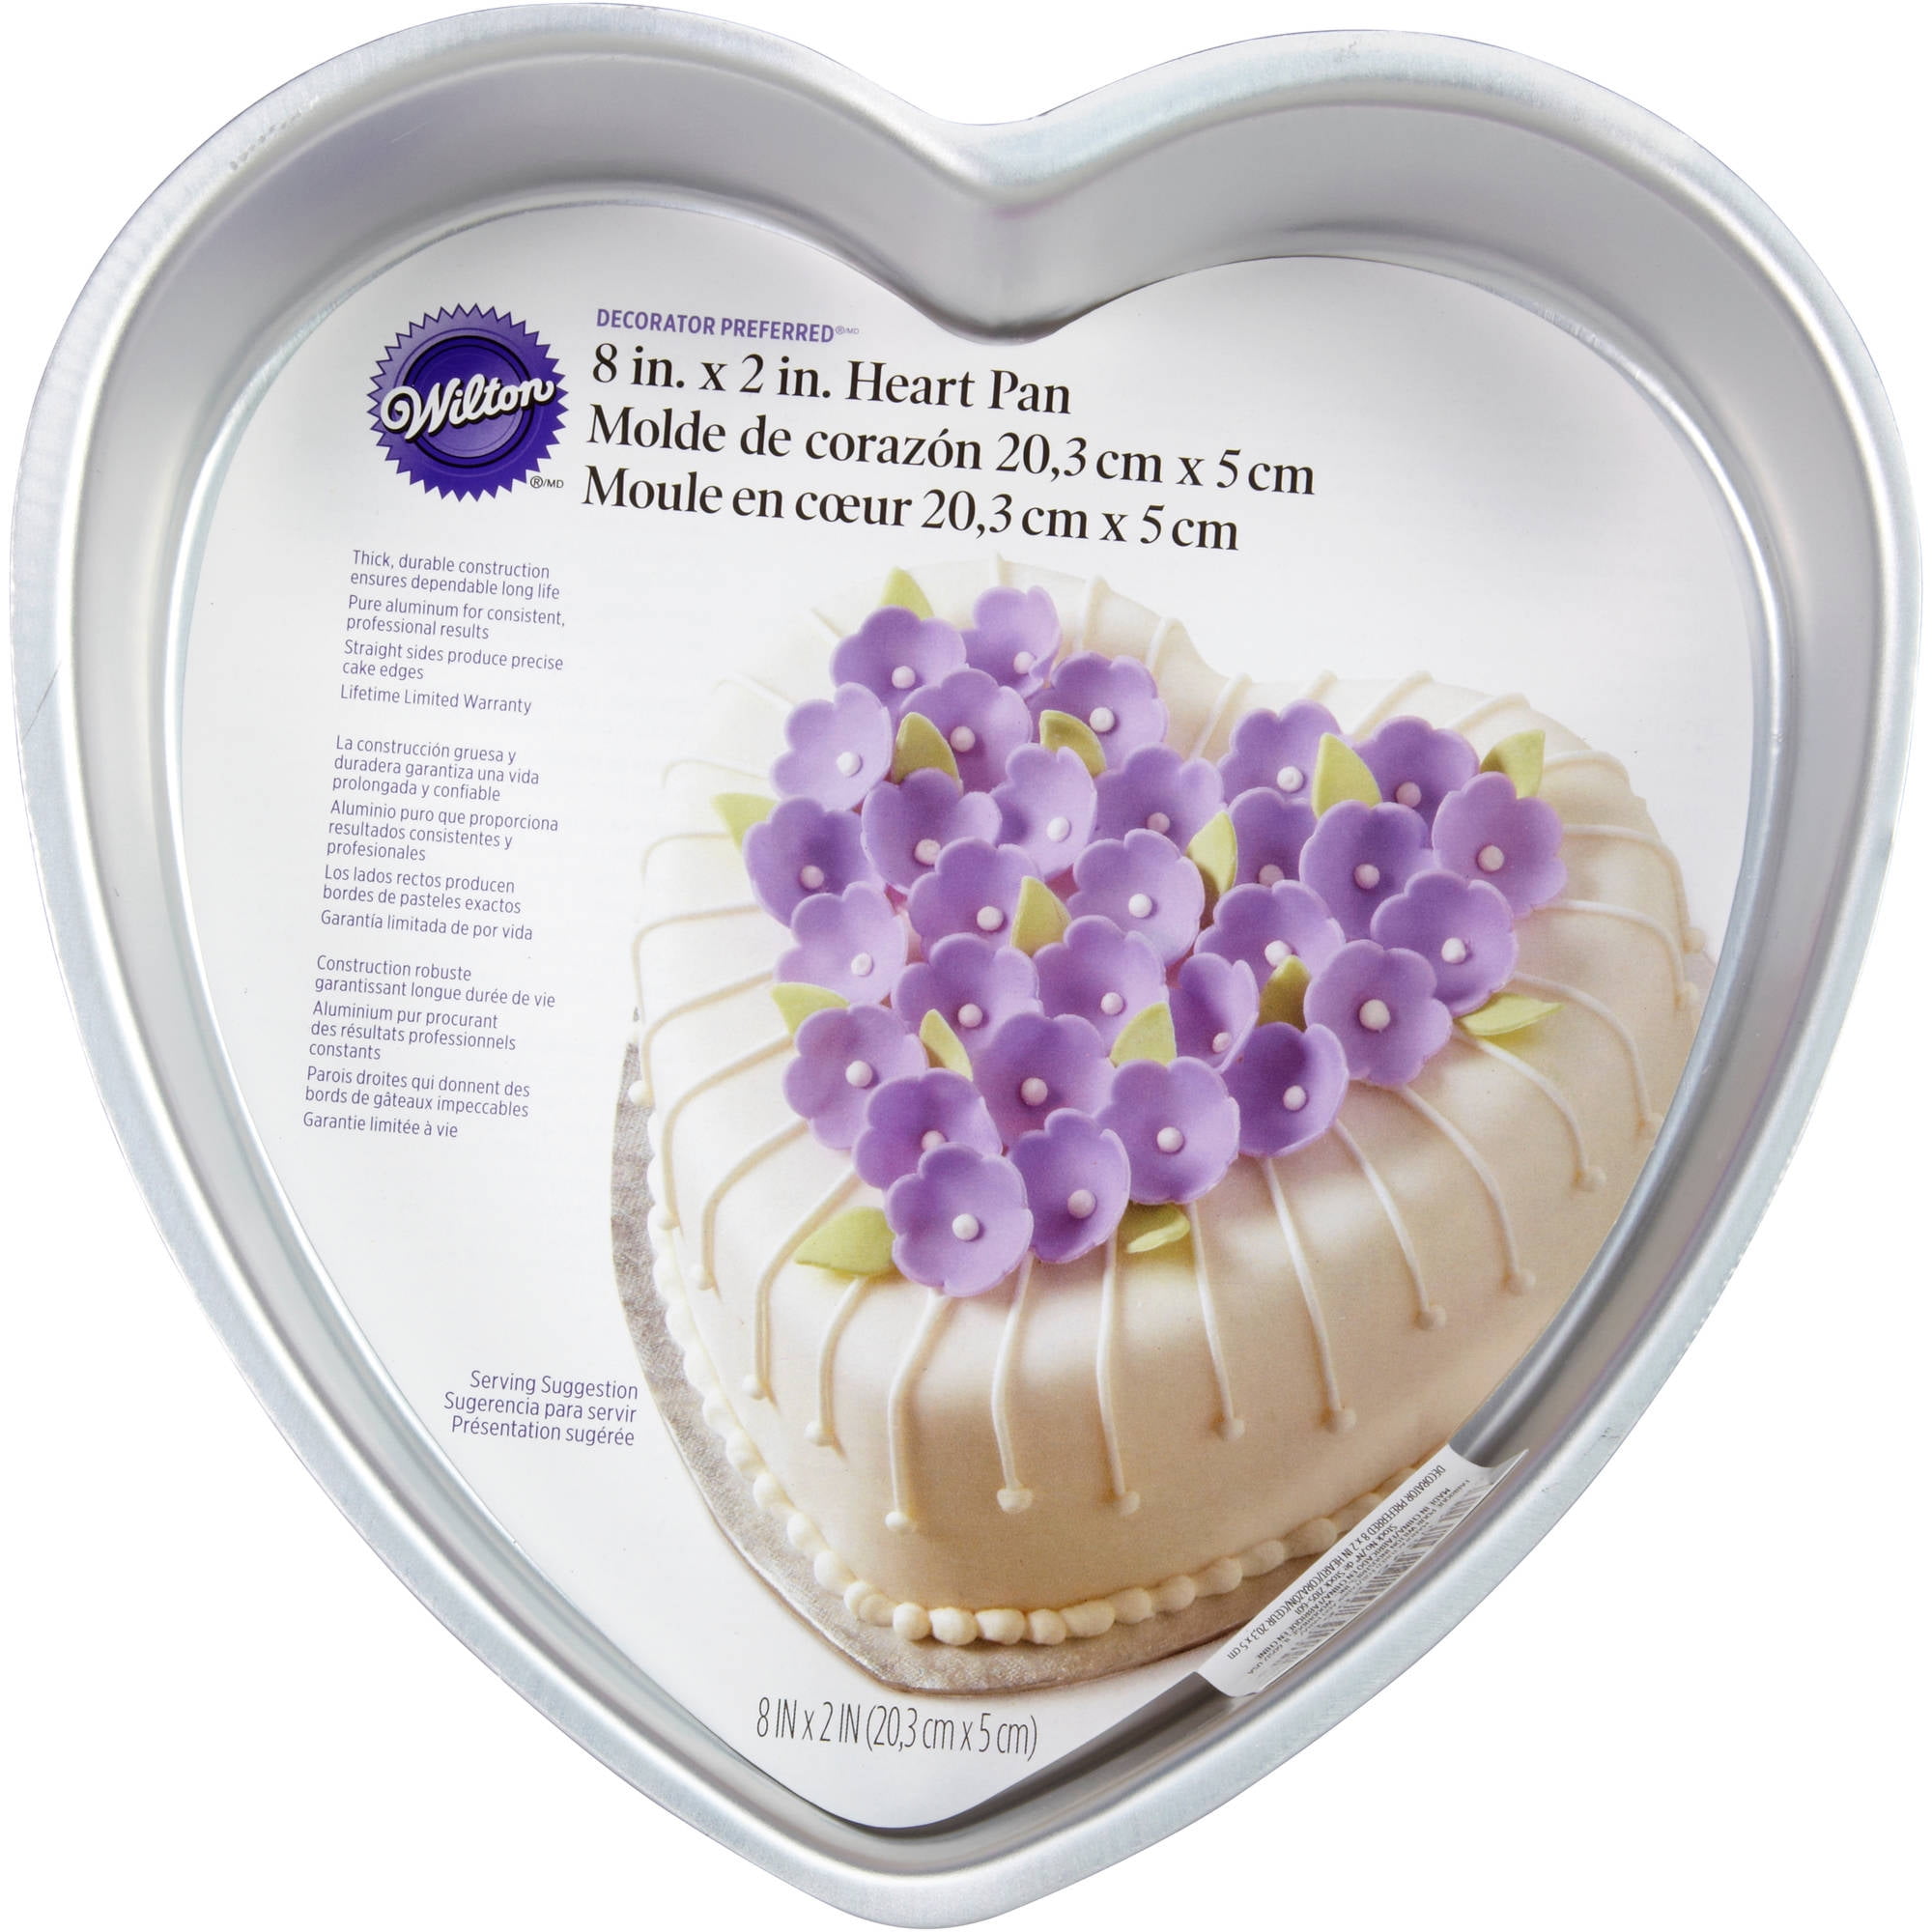 Wilton 1991 2105-5176 Heart Shaped Cake Pan Extra Large Cookie 9" x 2" Aluminum 